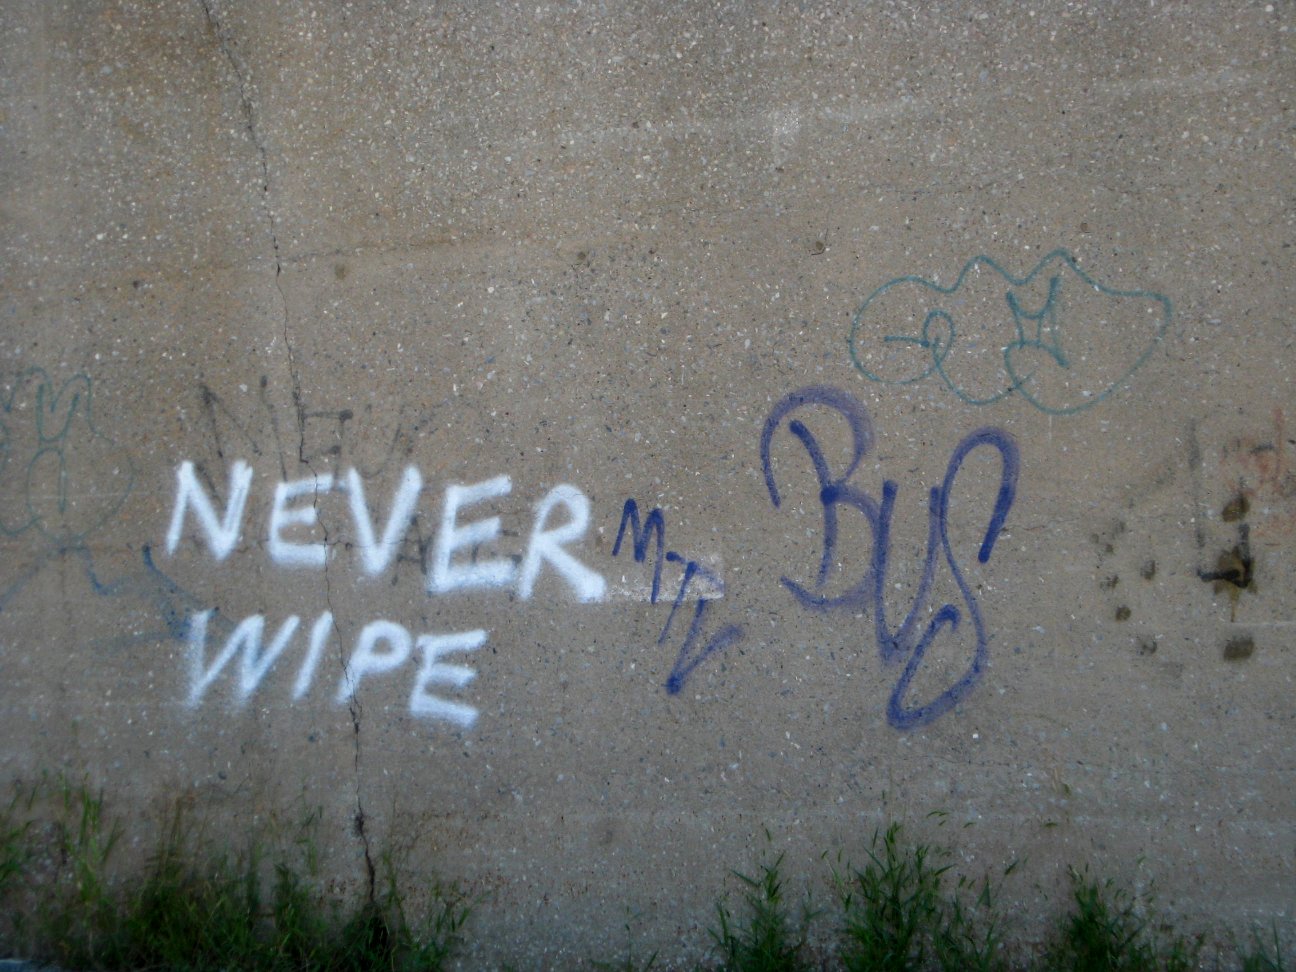 Kuhiphopinpopularculture2 Week 5 Graffiti